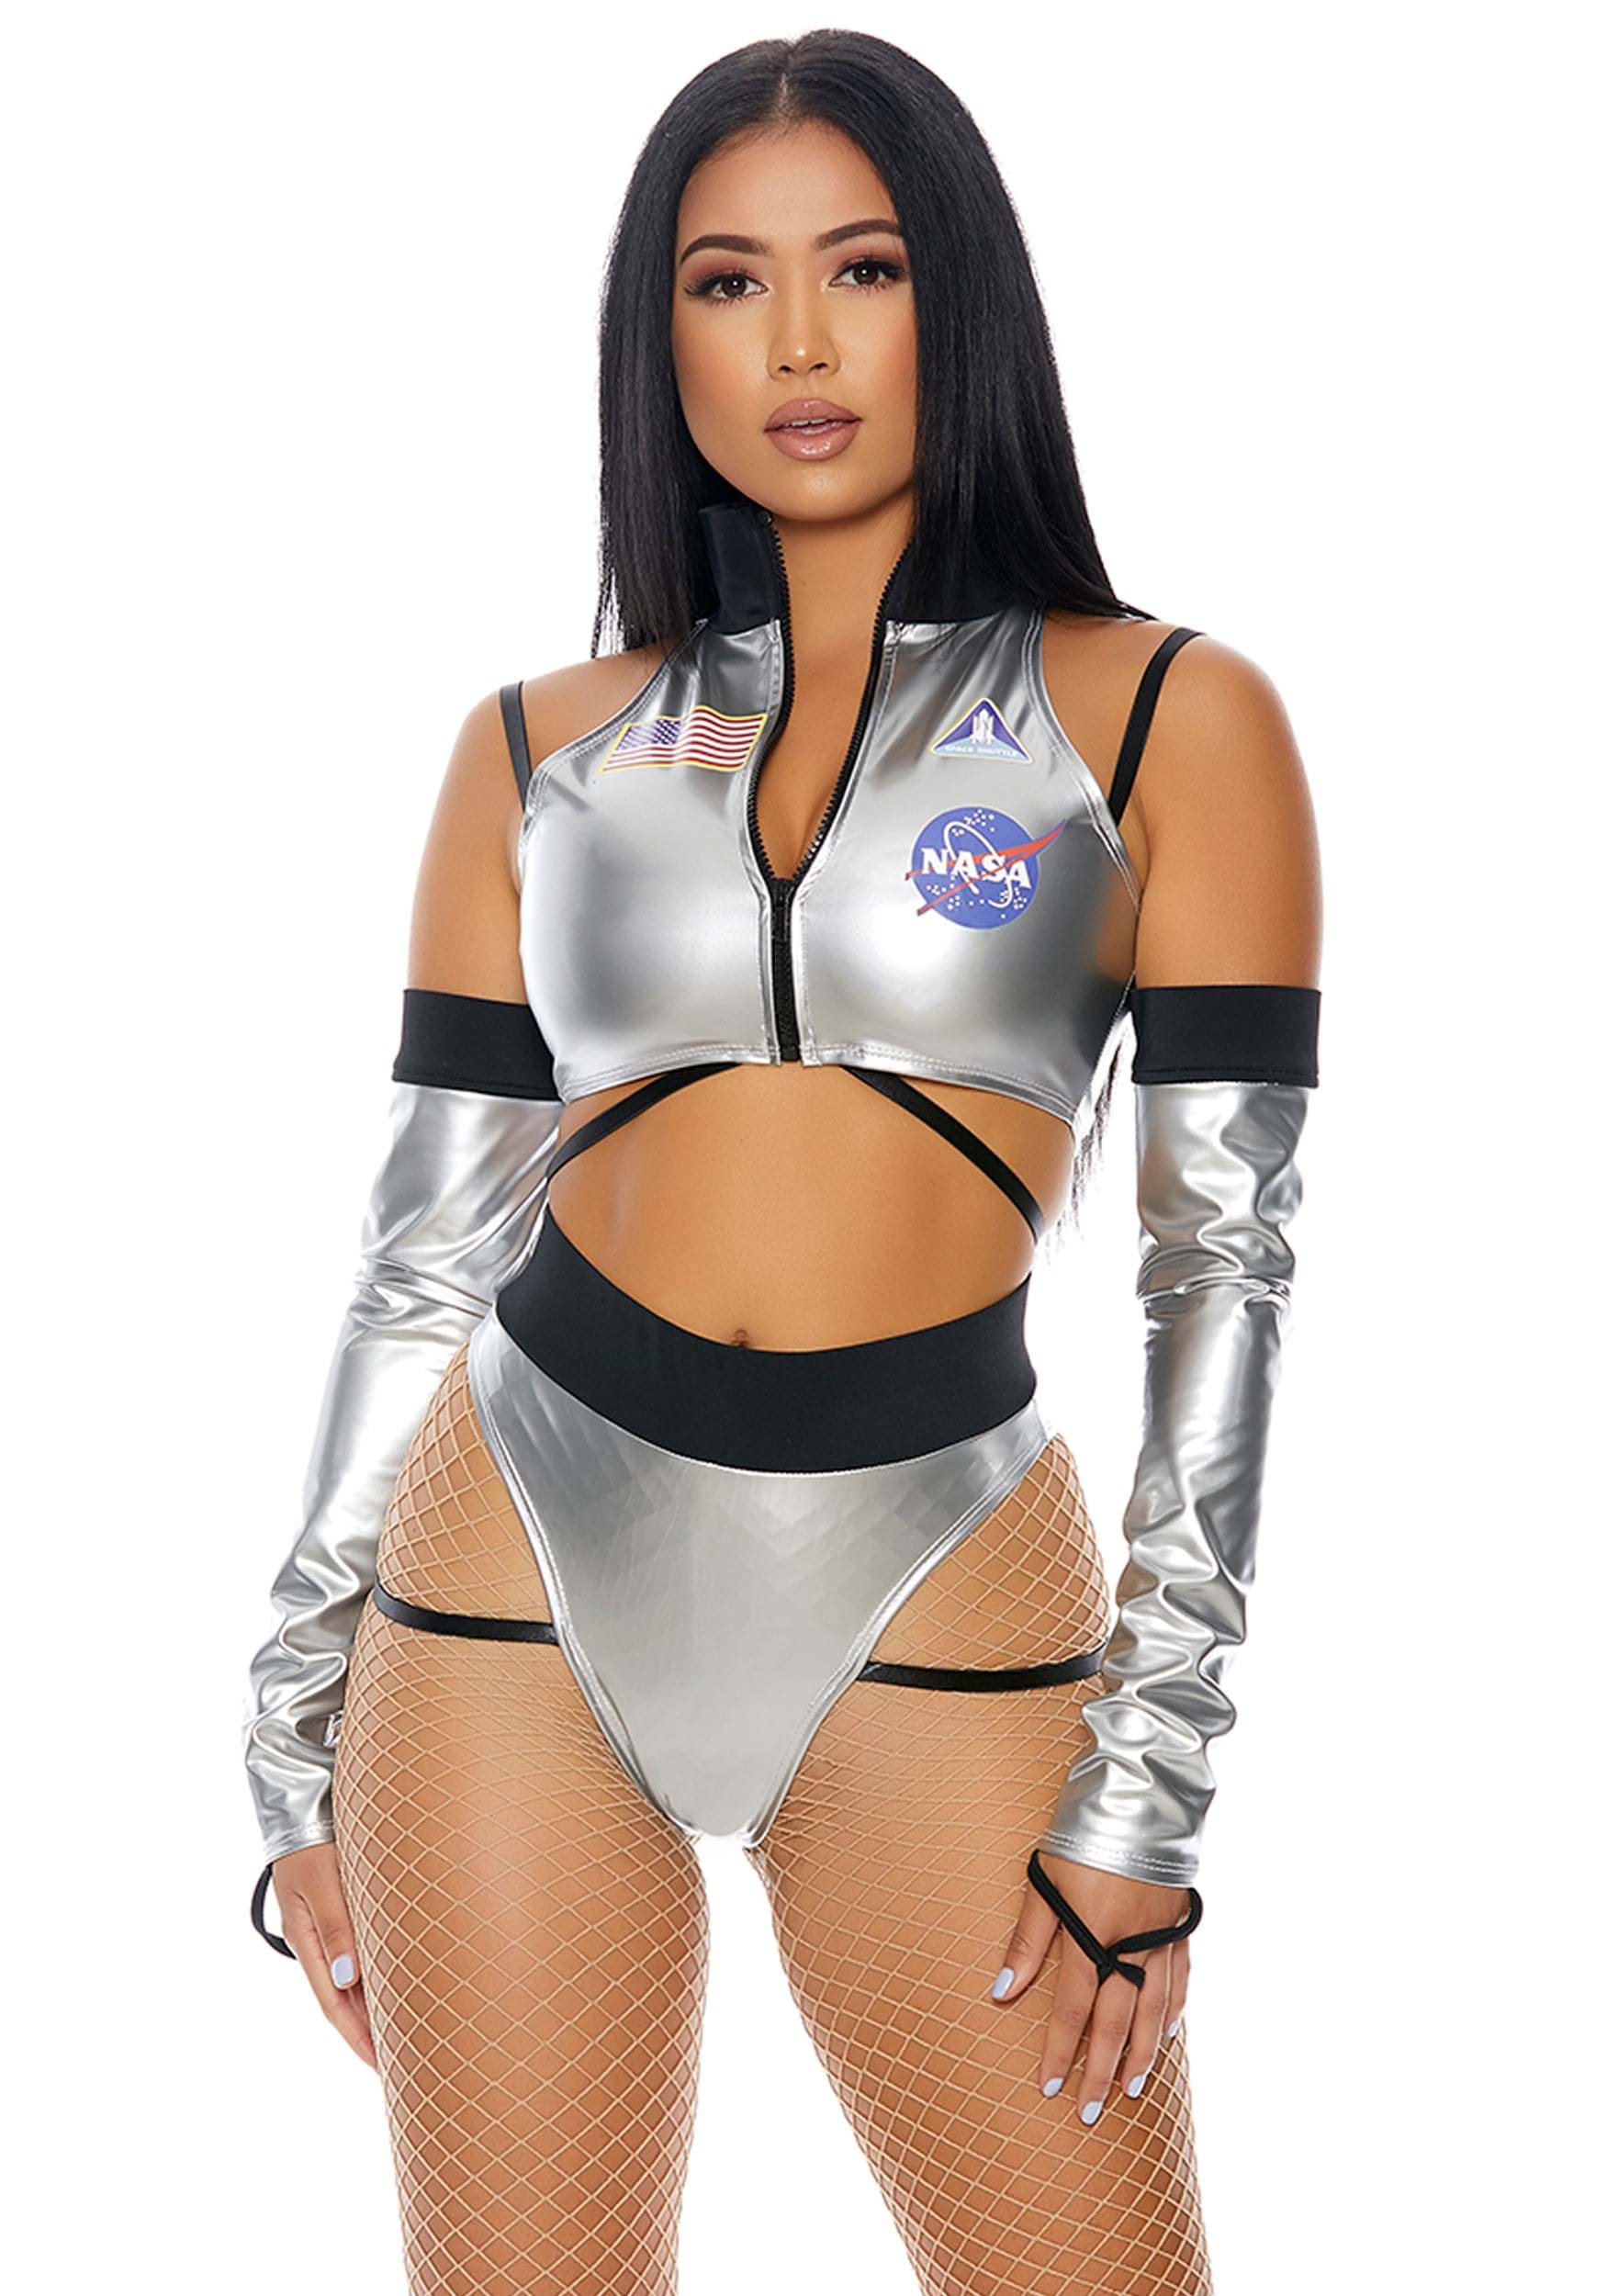 To The Moon Astronaut Women's Costume